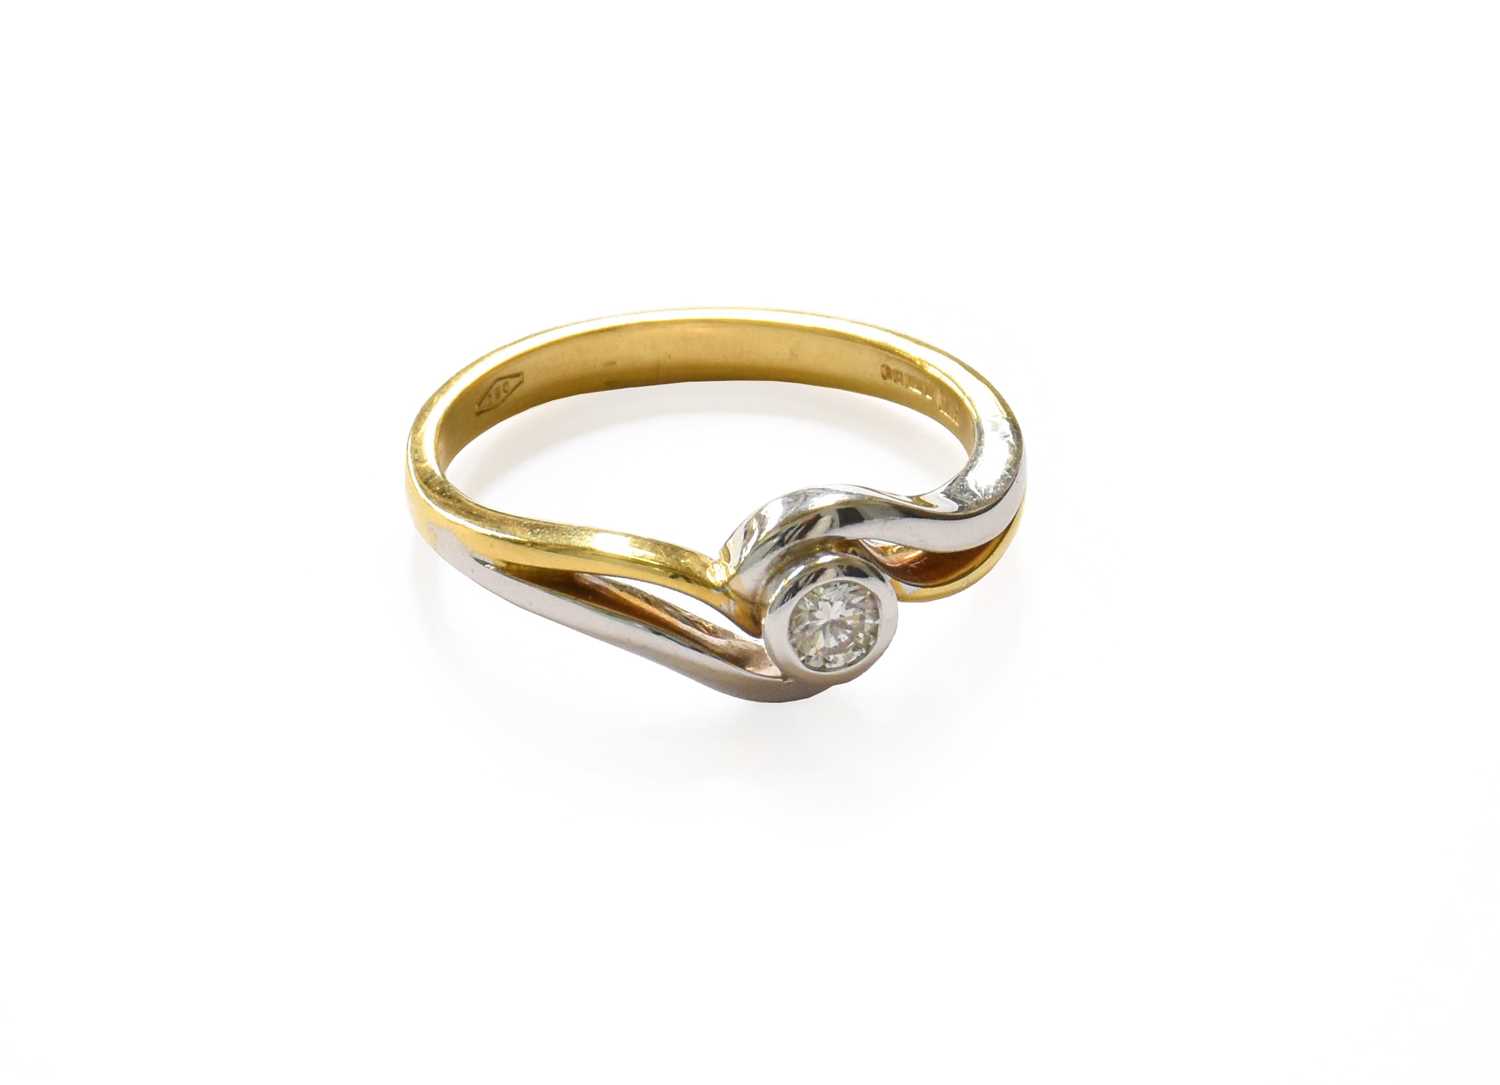 An 18 Carat Gold Diamond Solitaire Ring, finger size M1/2Gross weight 3.7 grams.